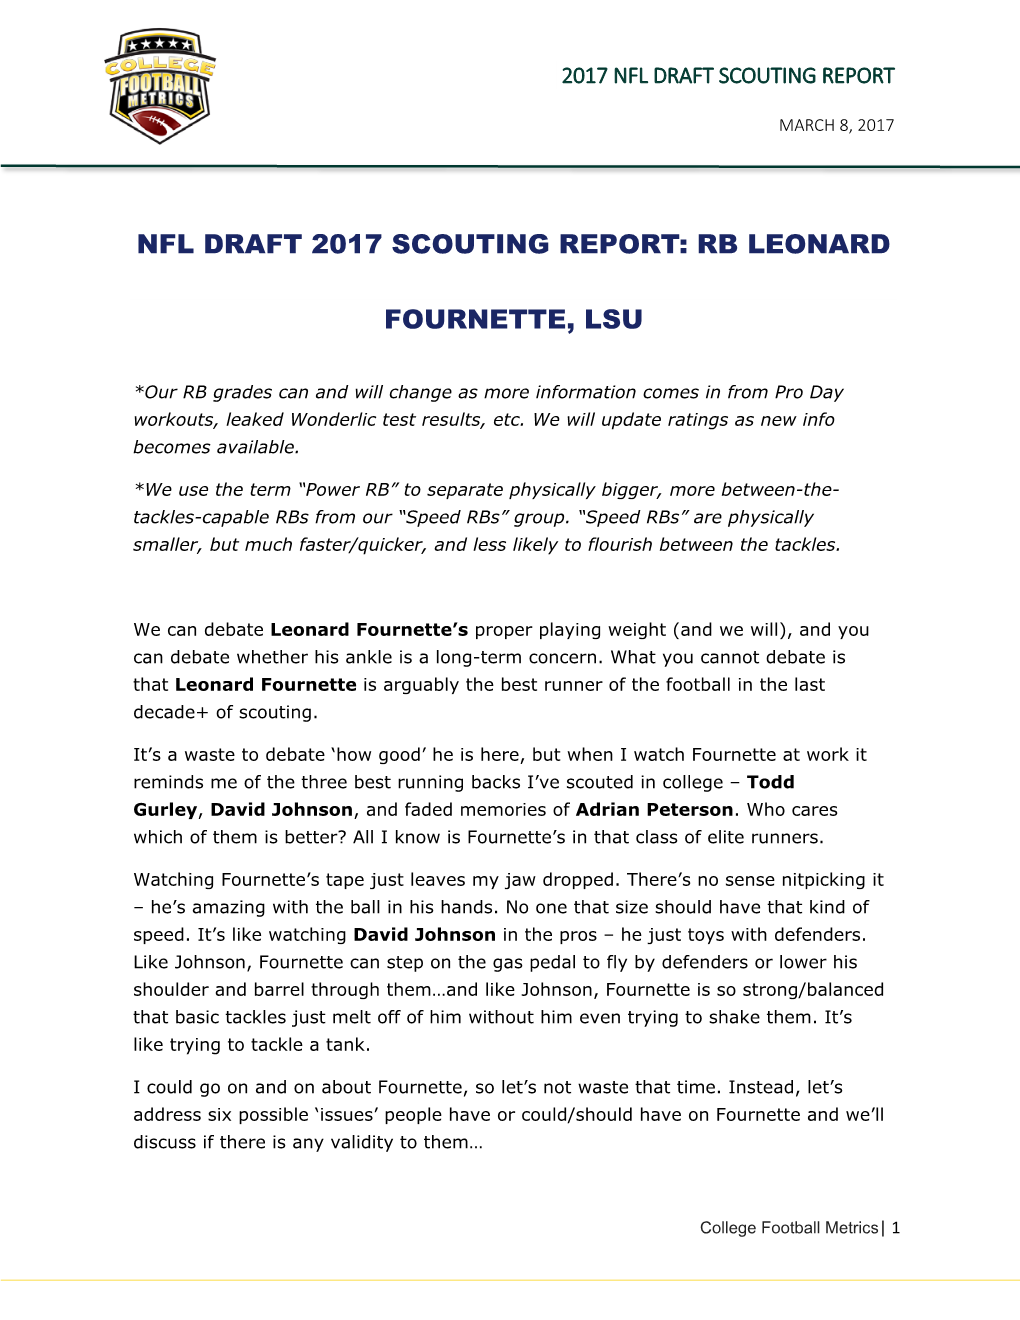 Nfl Draft 2017 Scouting Report: Rb Leonard